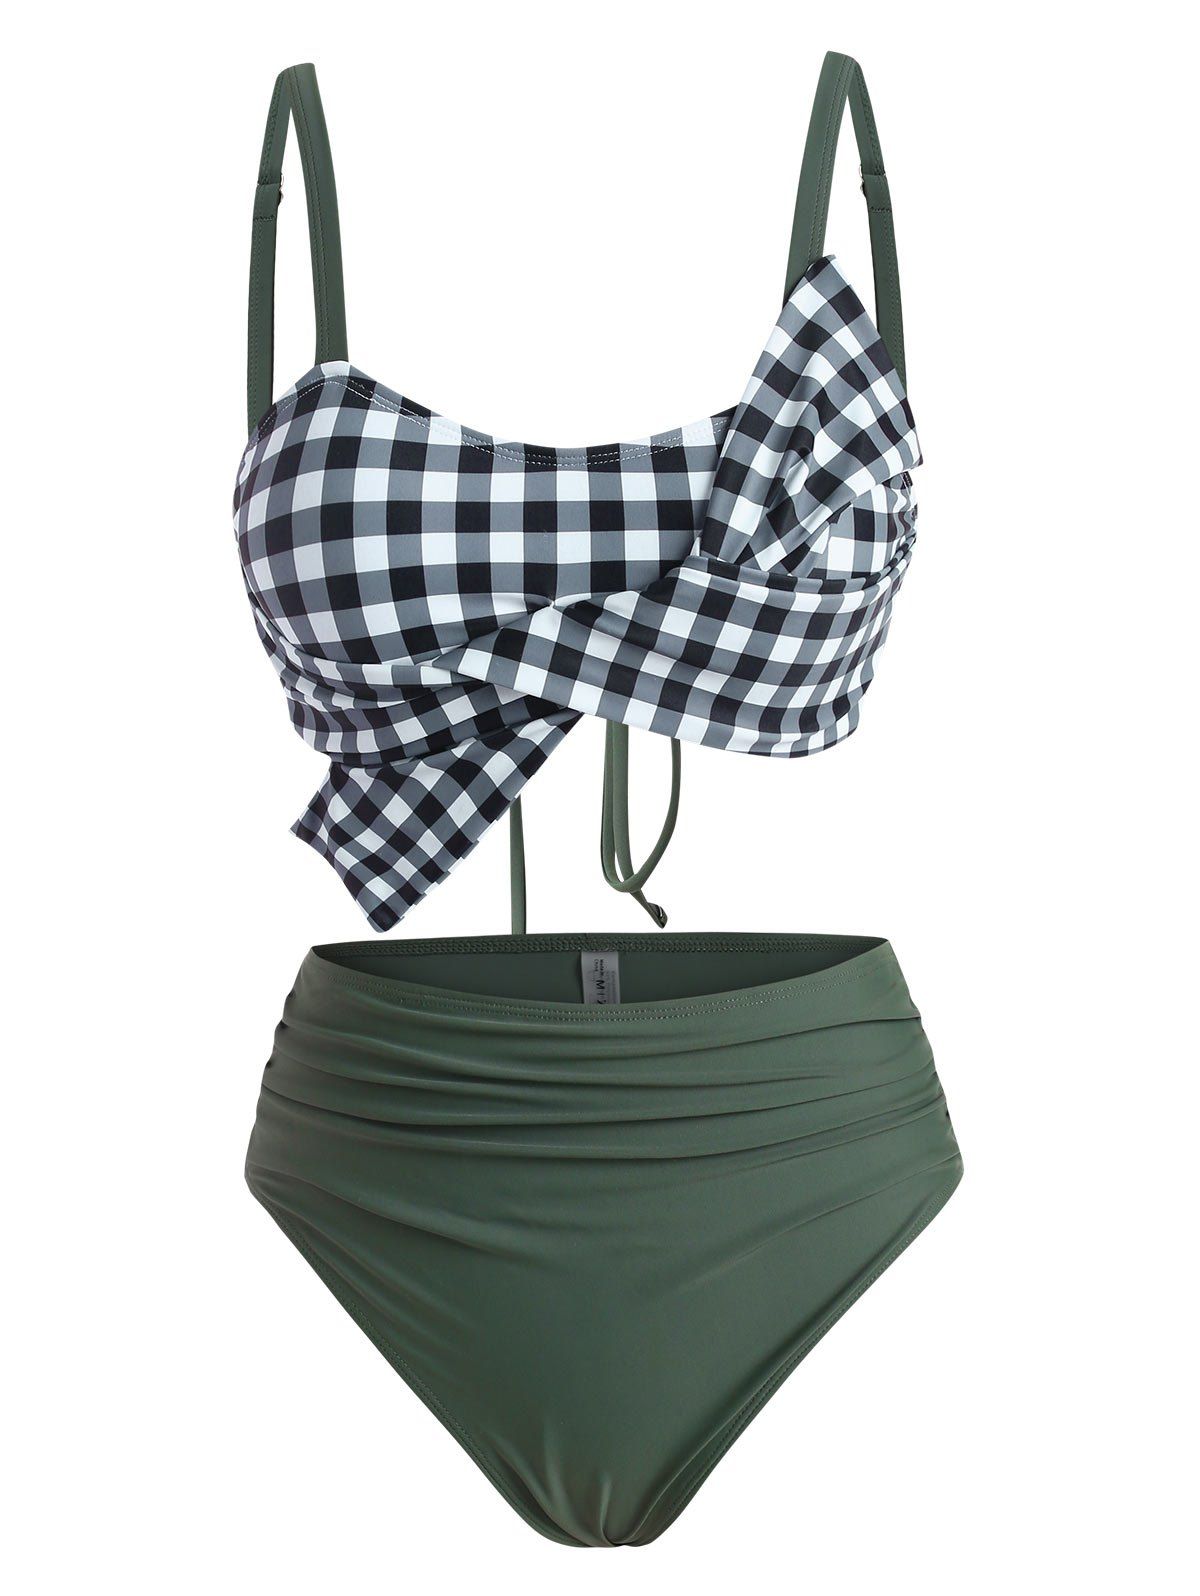 Tummy Control Tankini Swimwear Gingham Bathing Suit Bowknot Lace Up Ruched Beach Swimsuit - DARK GRAY XXL